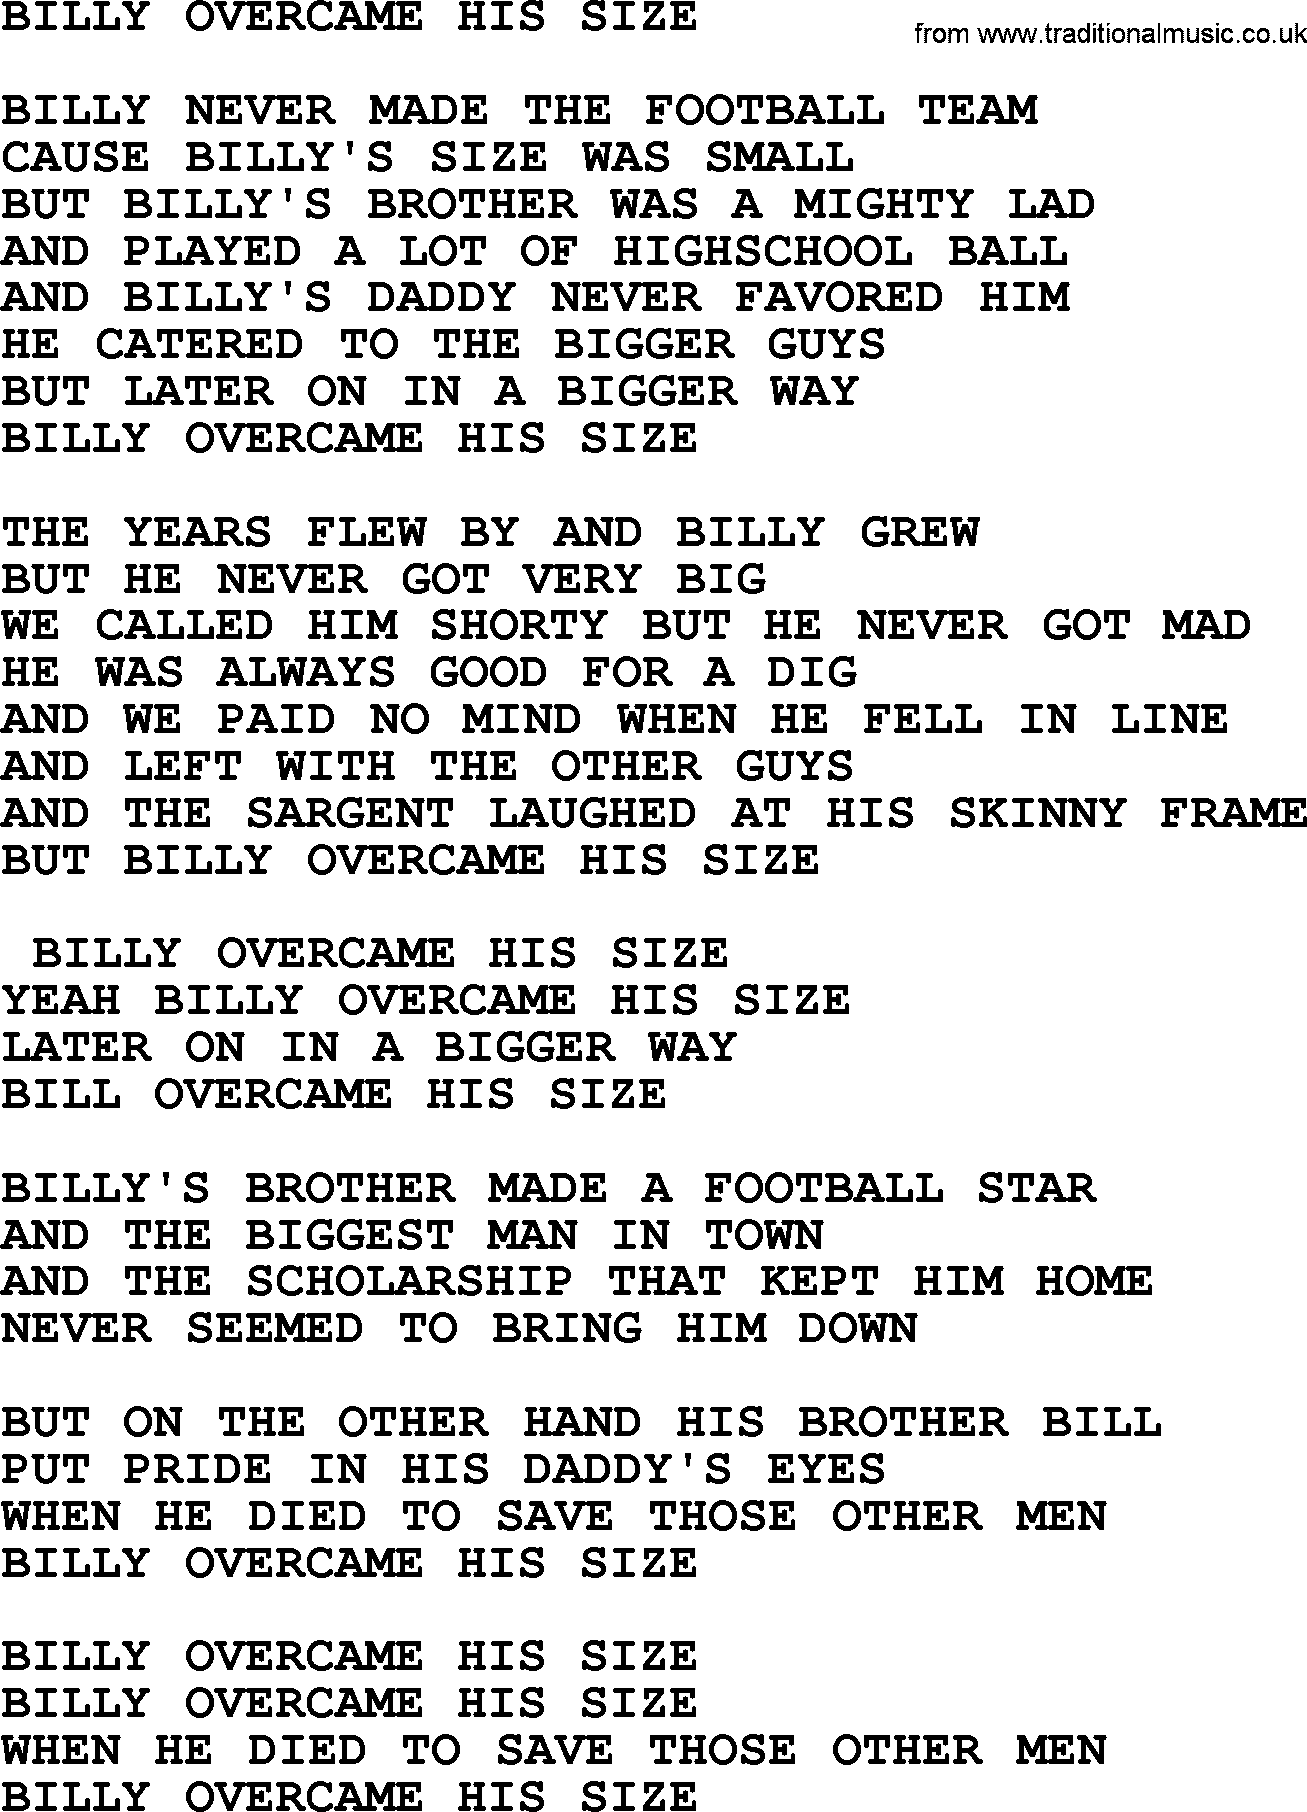 Merle Haggard song: Billy Overcame His Size, lyrics.